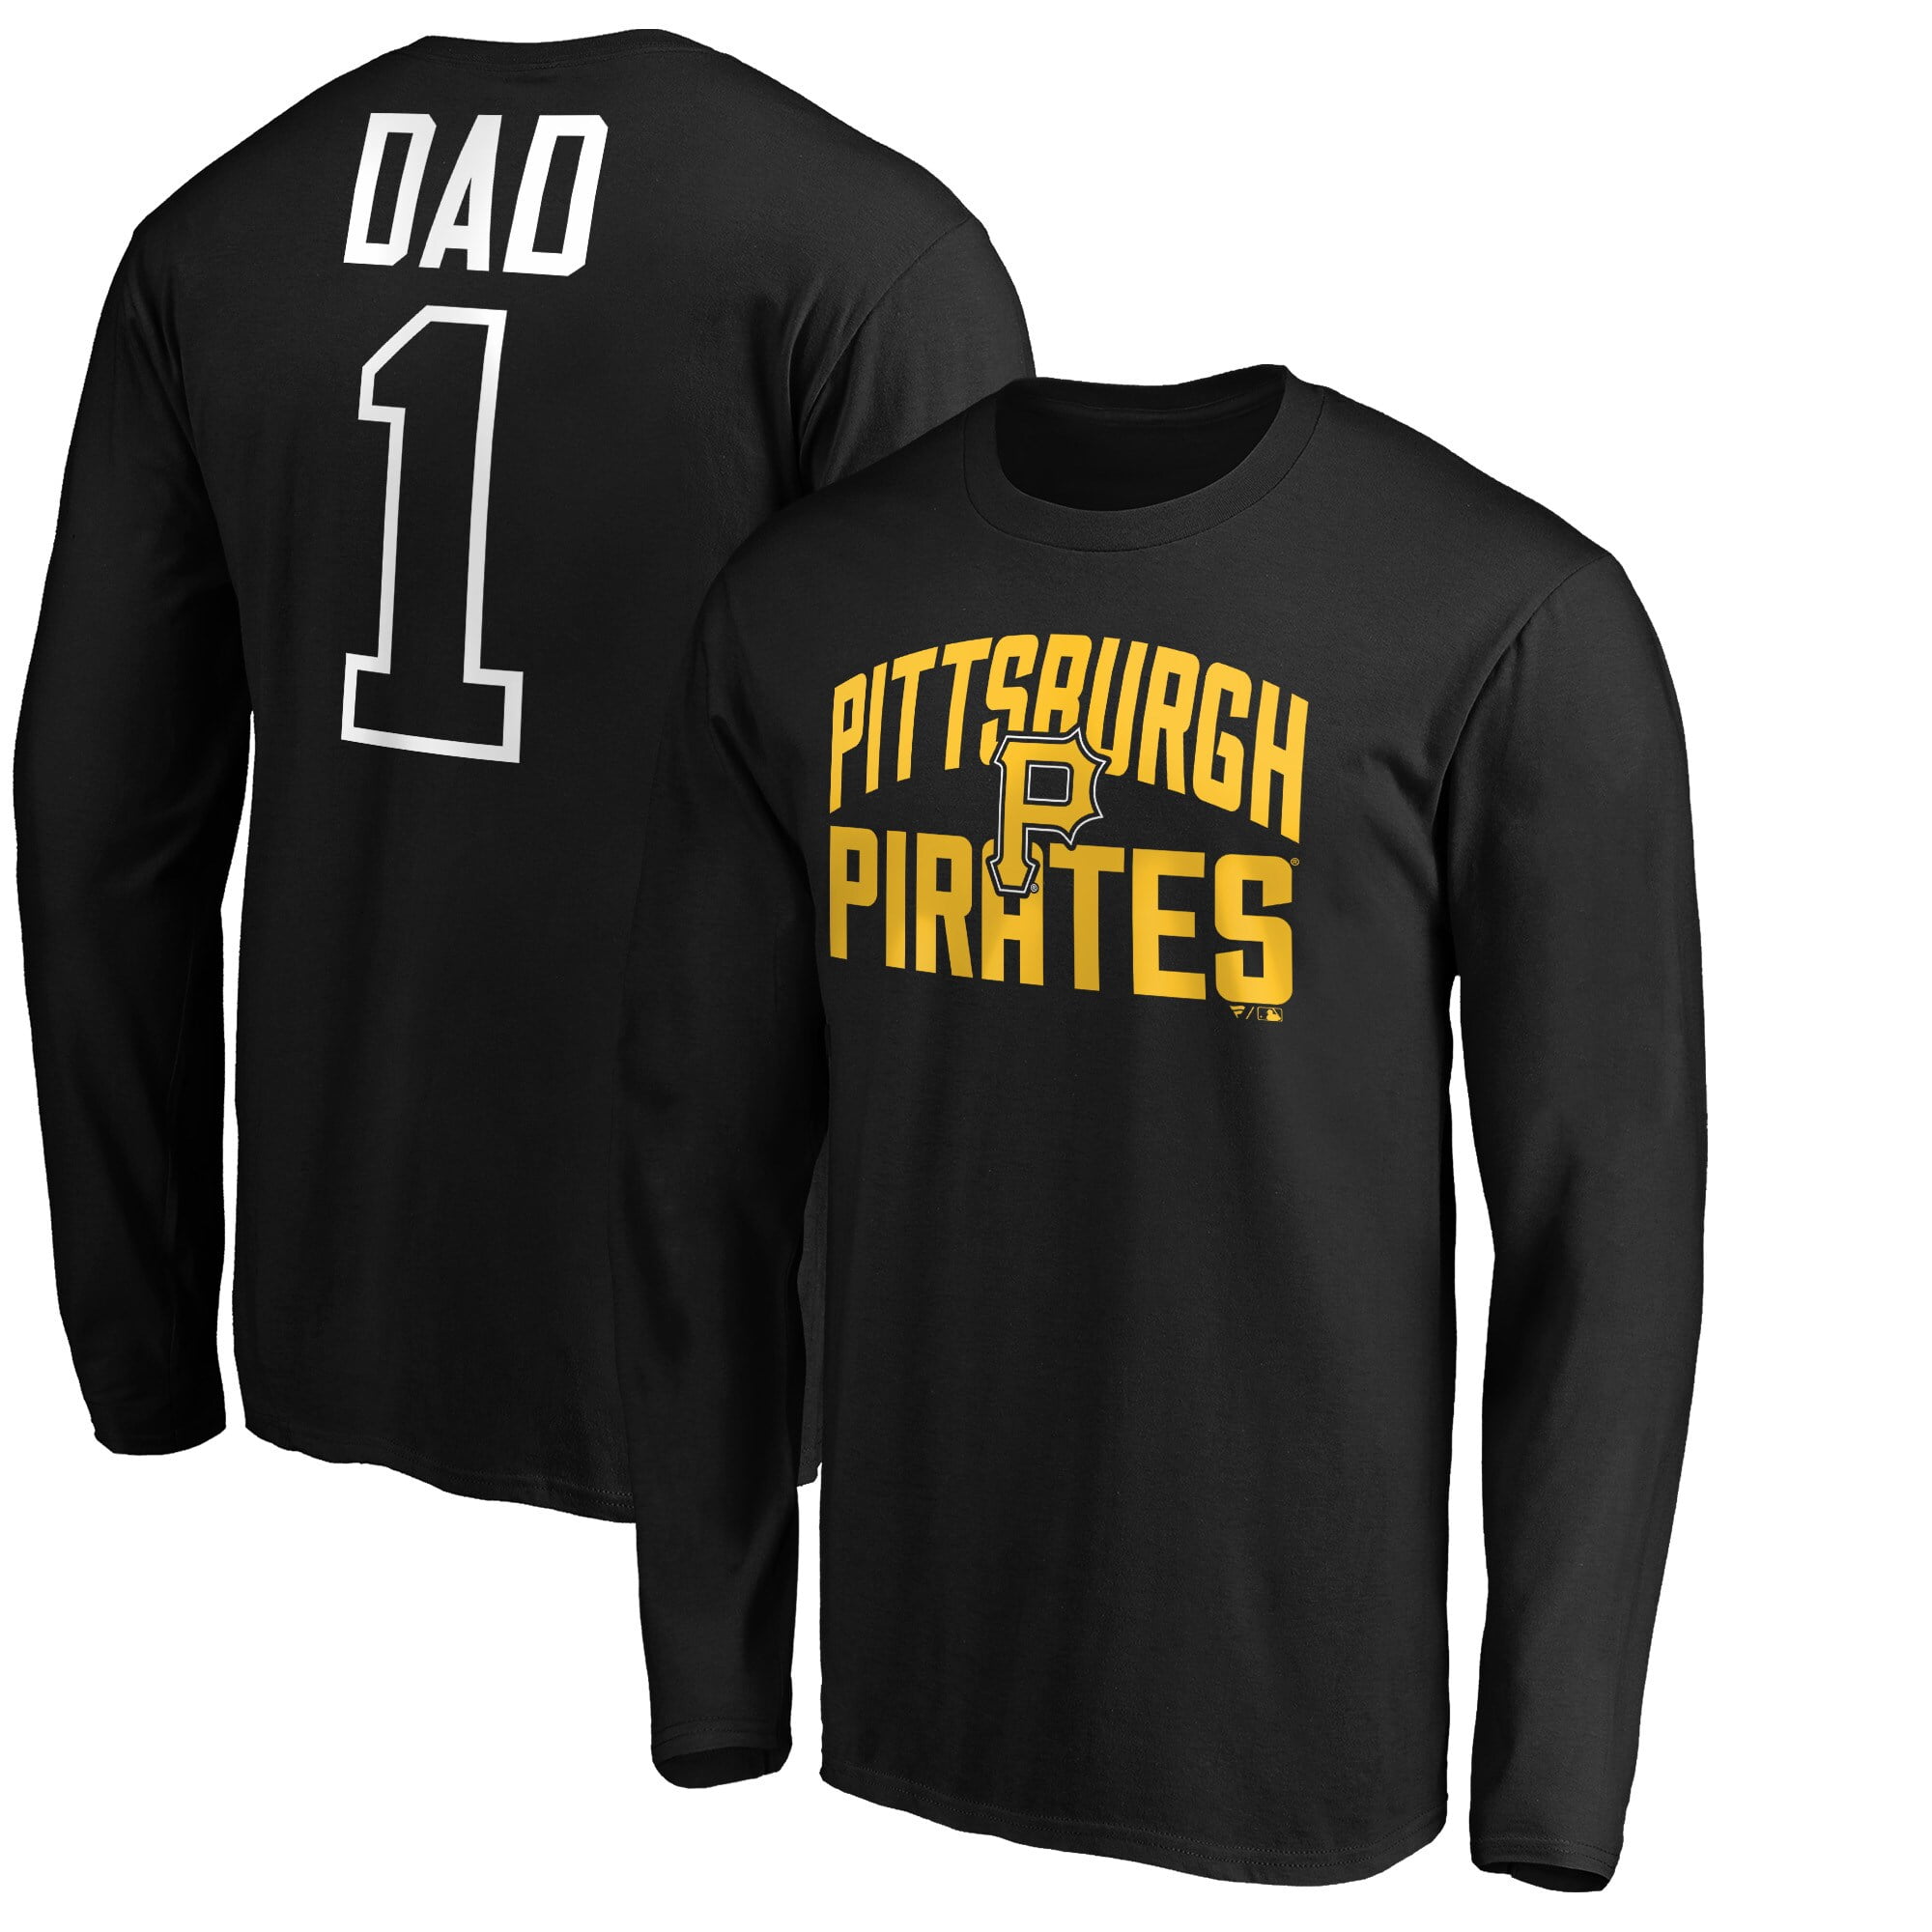 pirates fathers day jersey